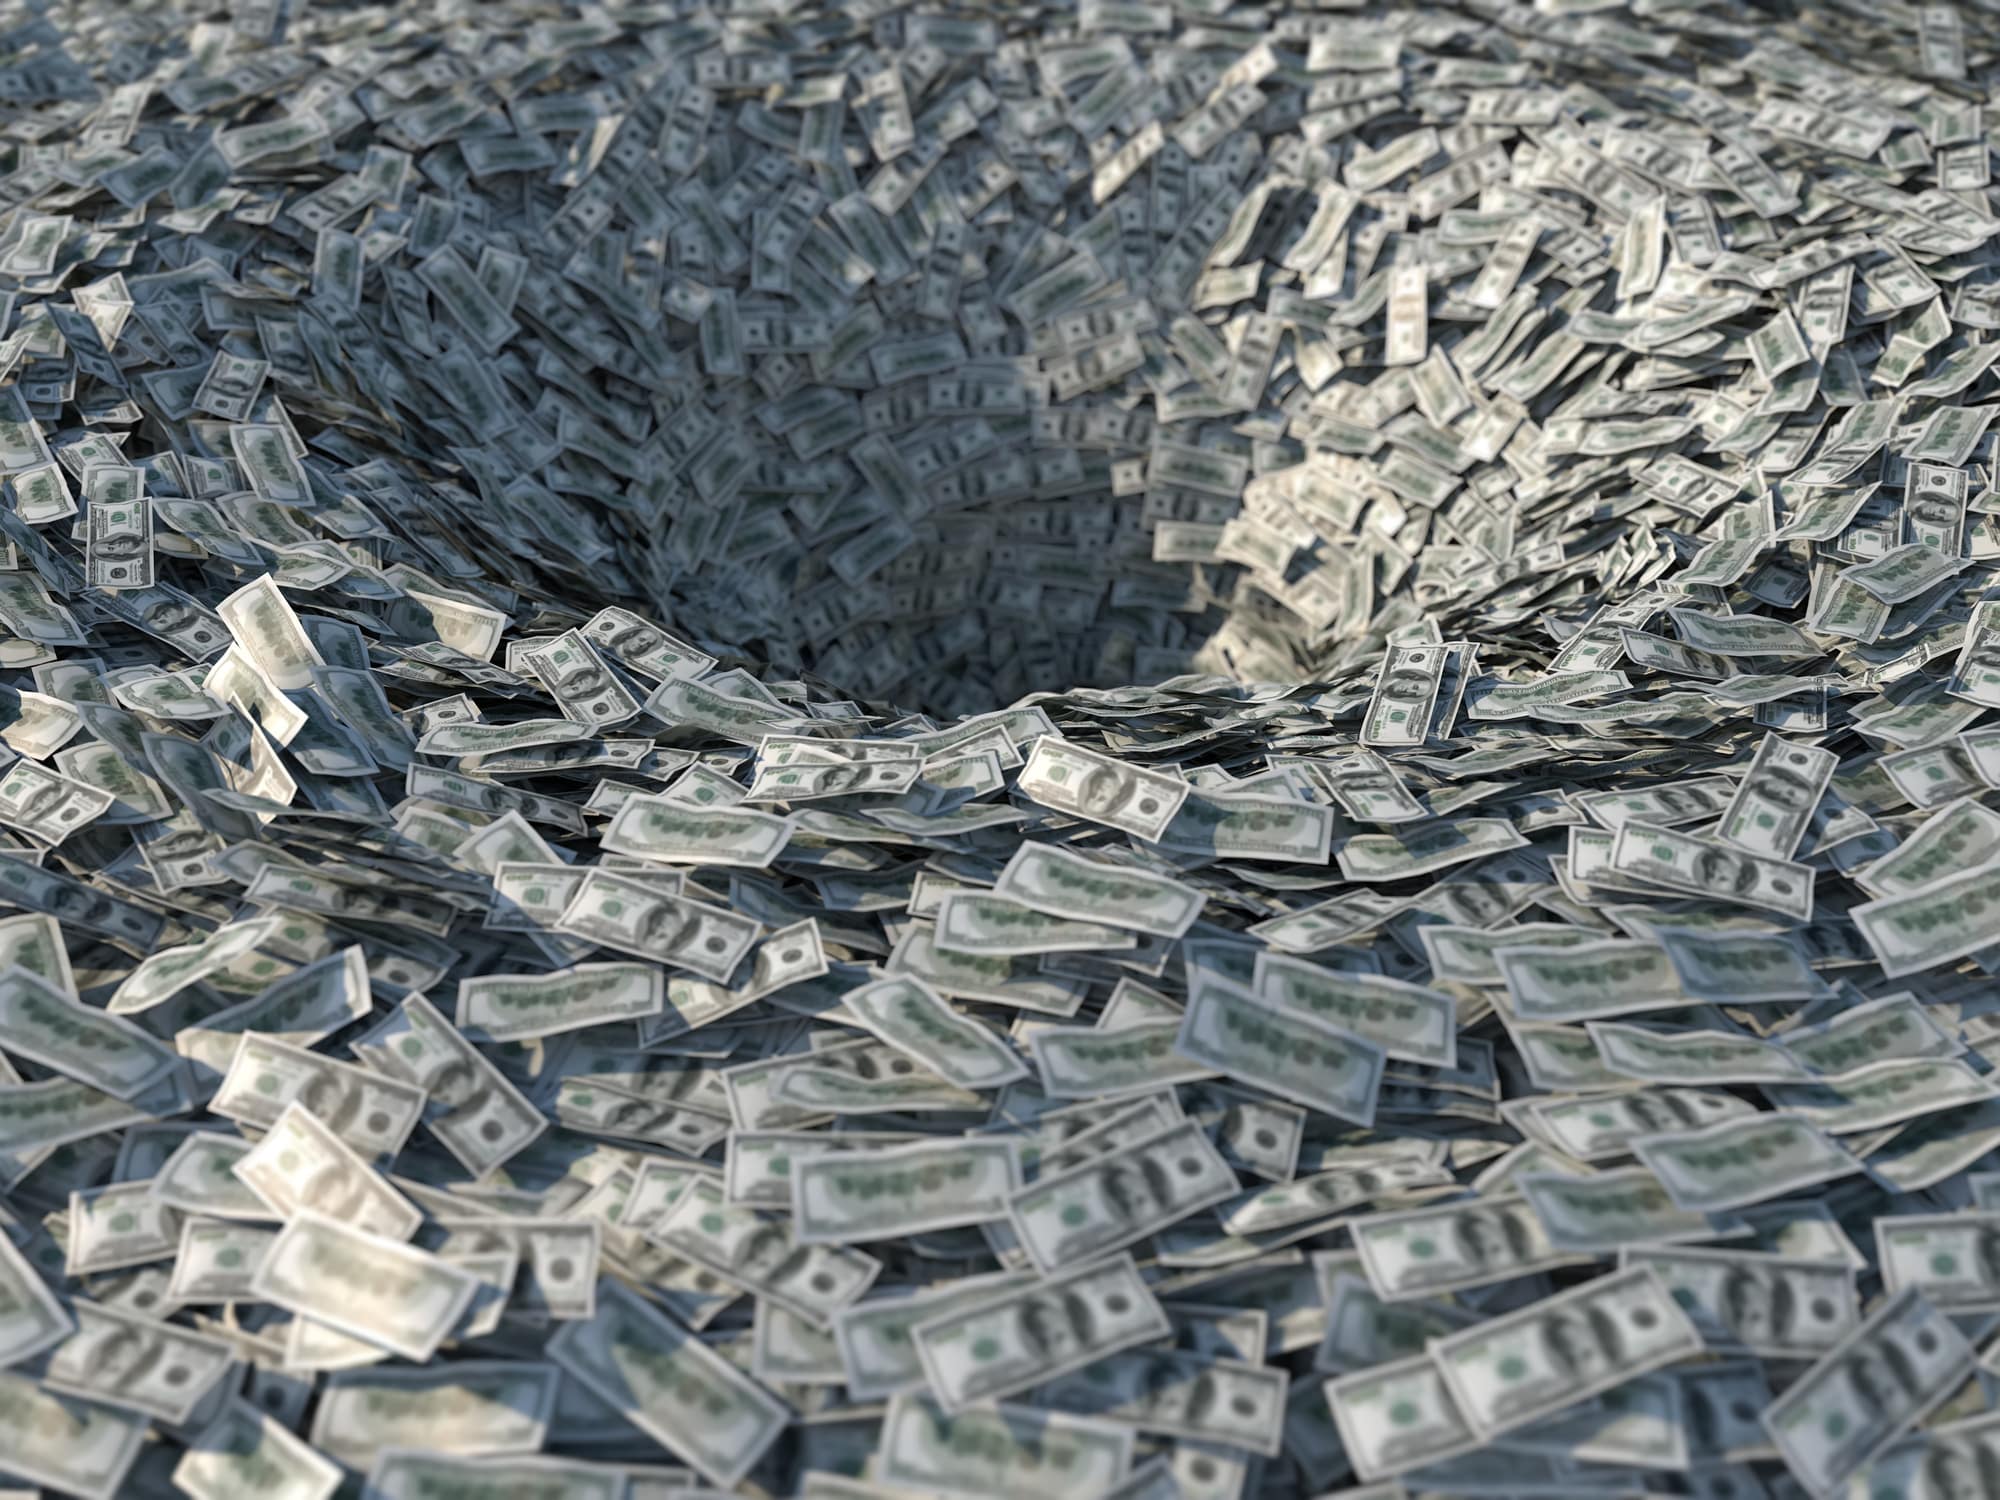 debt avalanche. Money flows into a bottomless funnel